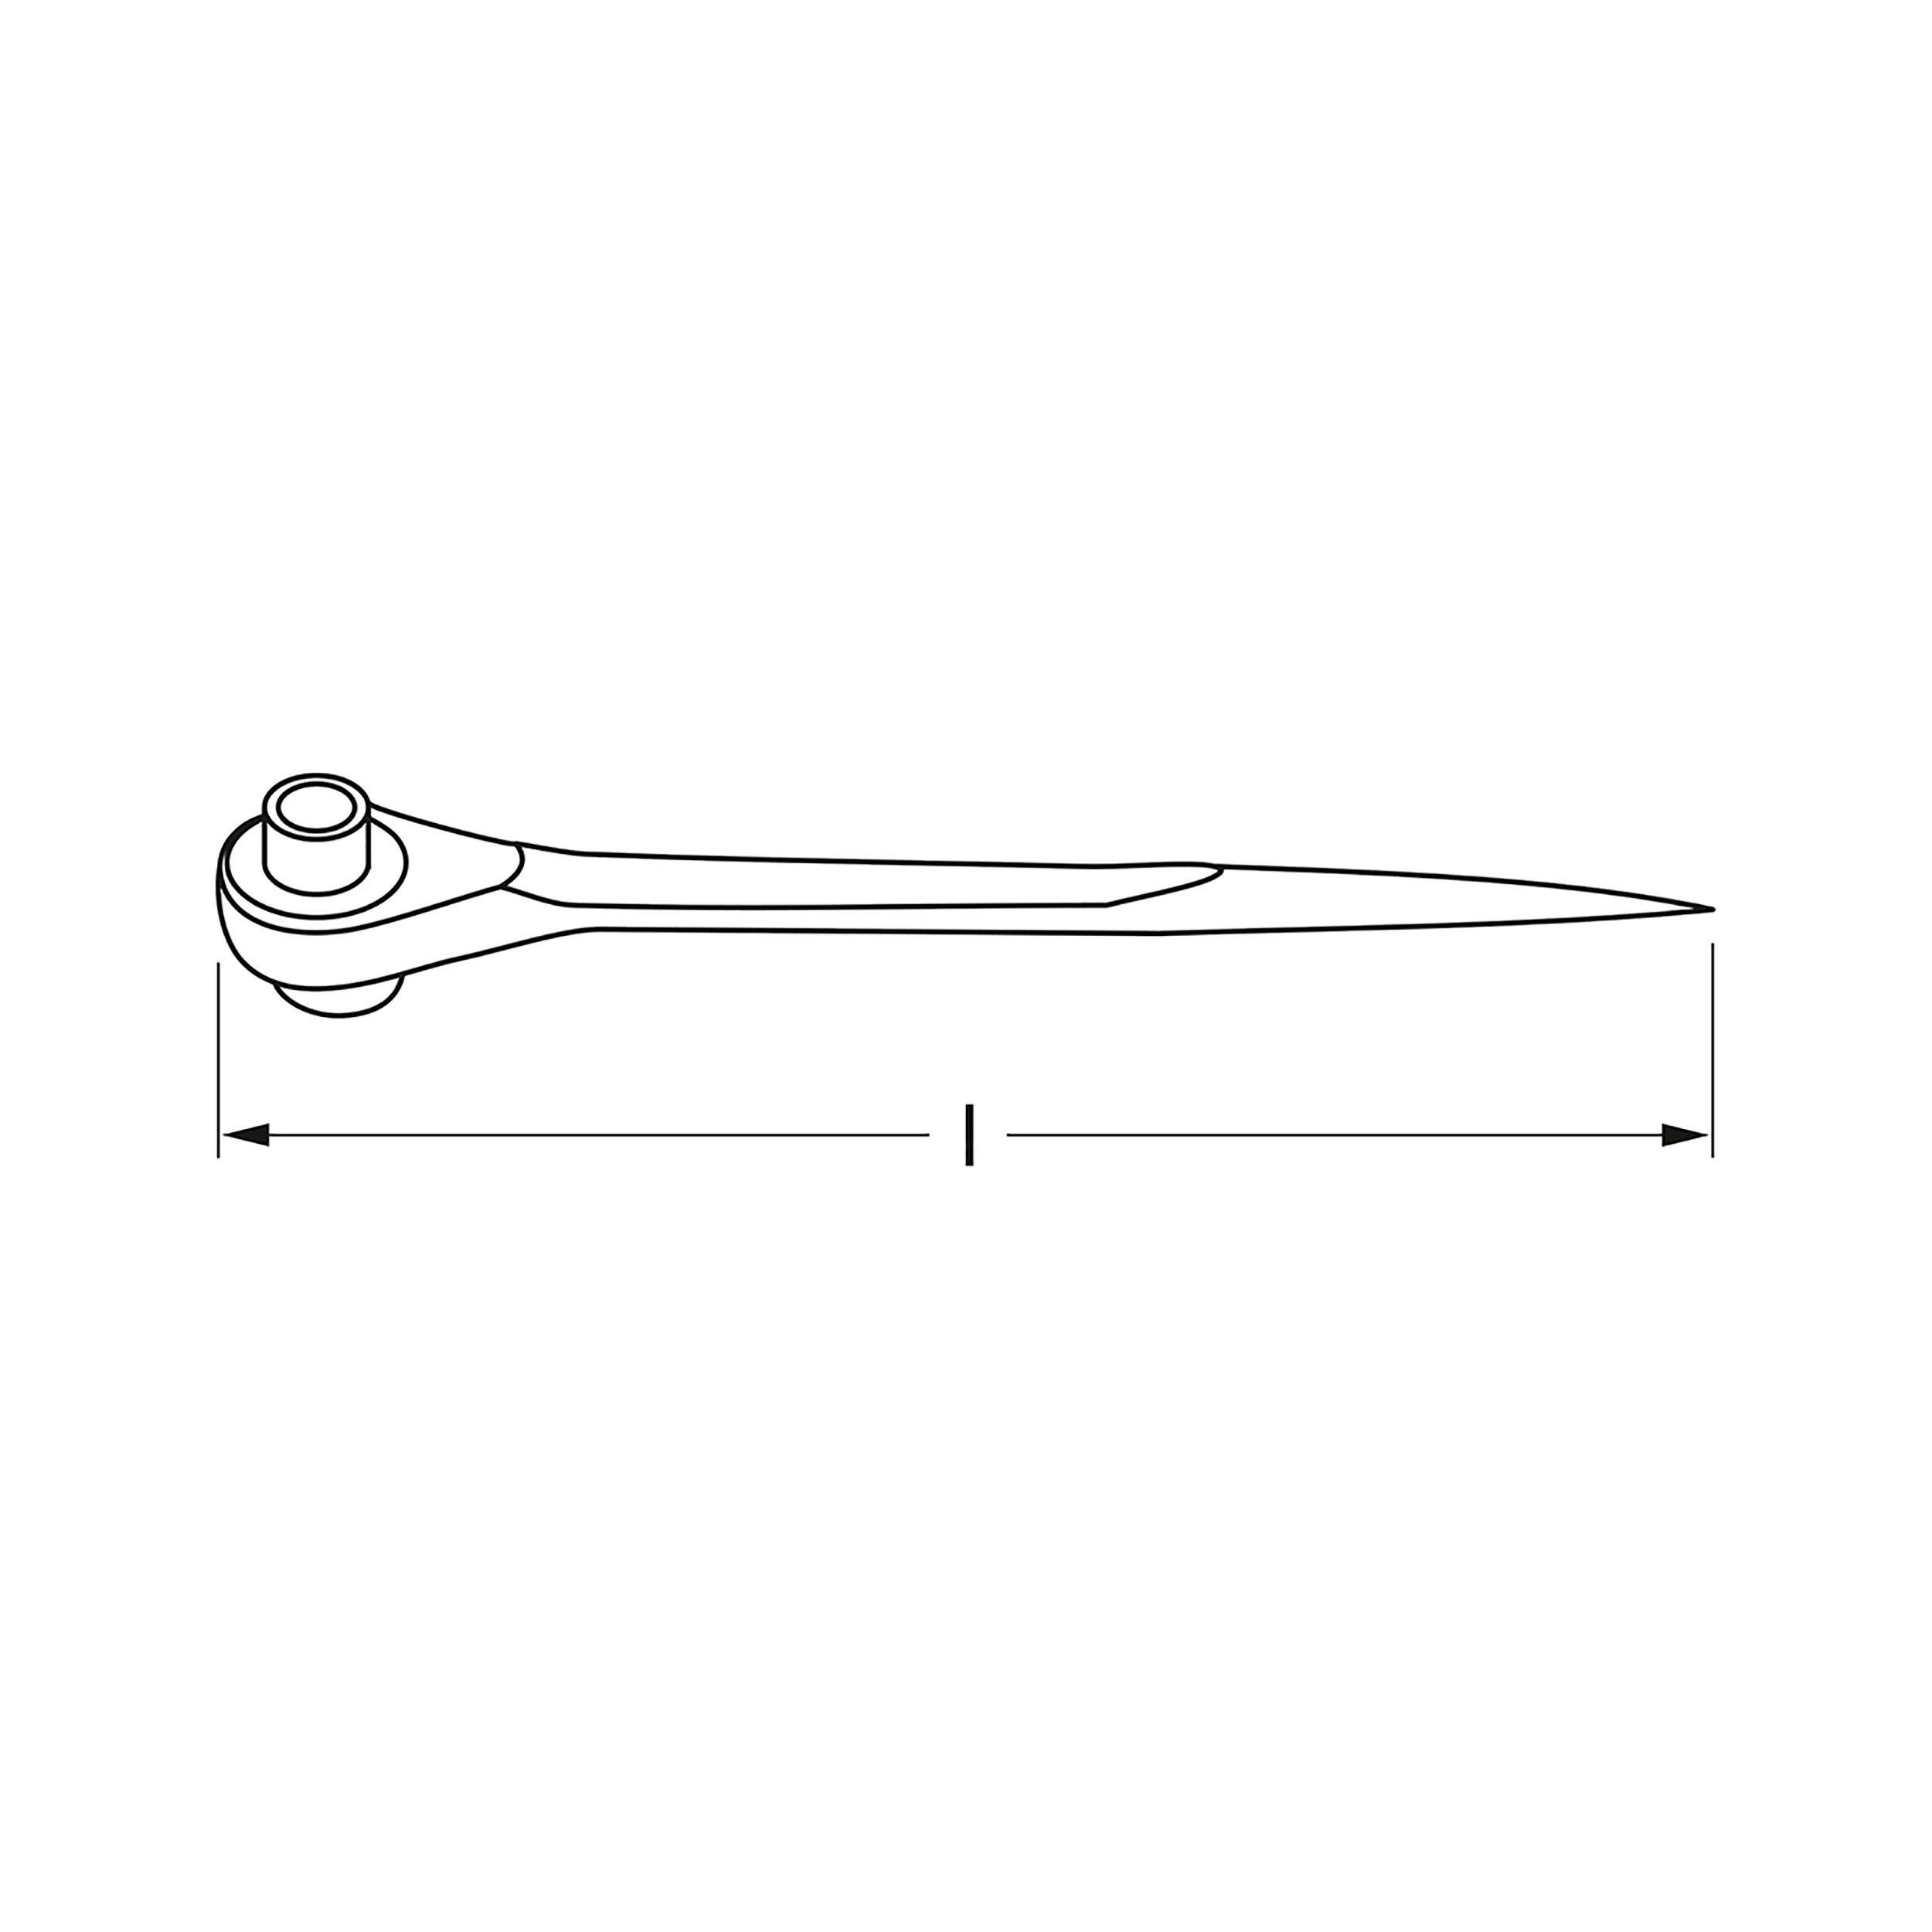 Gerüstbauknarre, 19x22 mm, MATADOR Art.-Nr.: 62001922